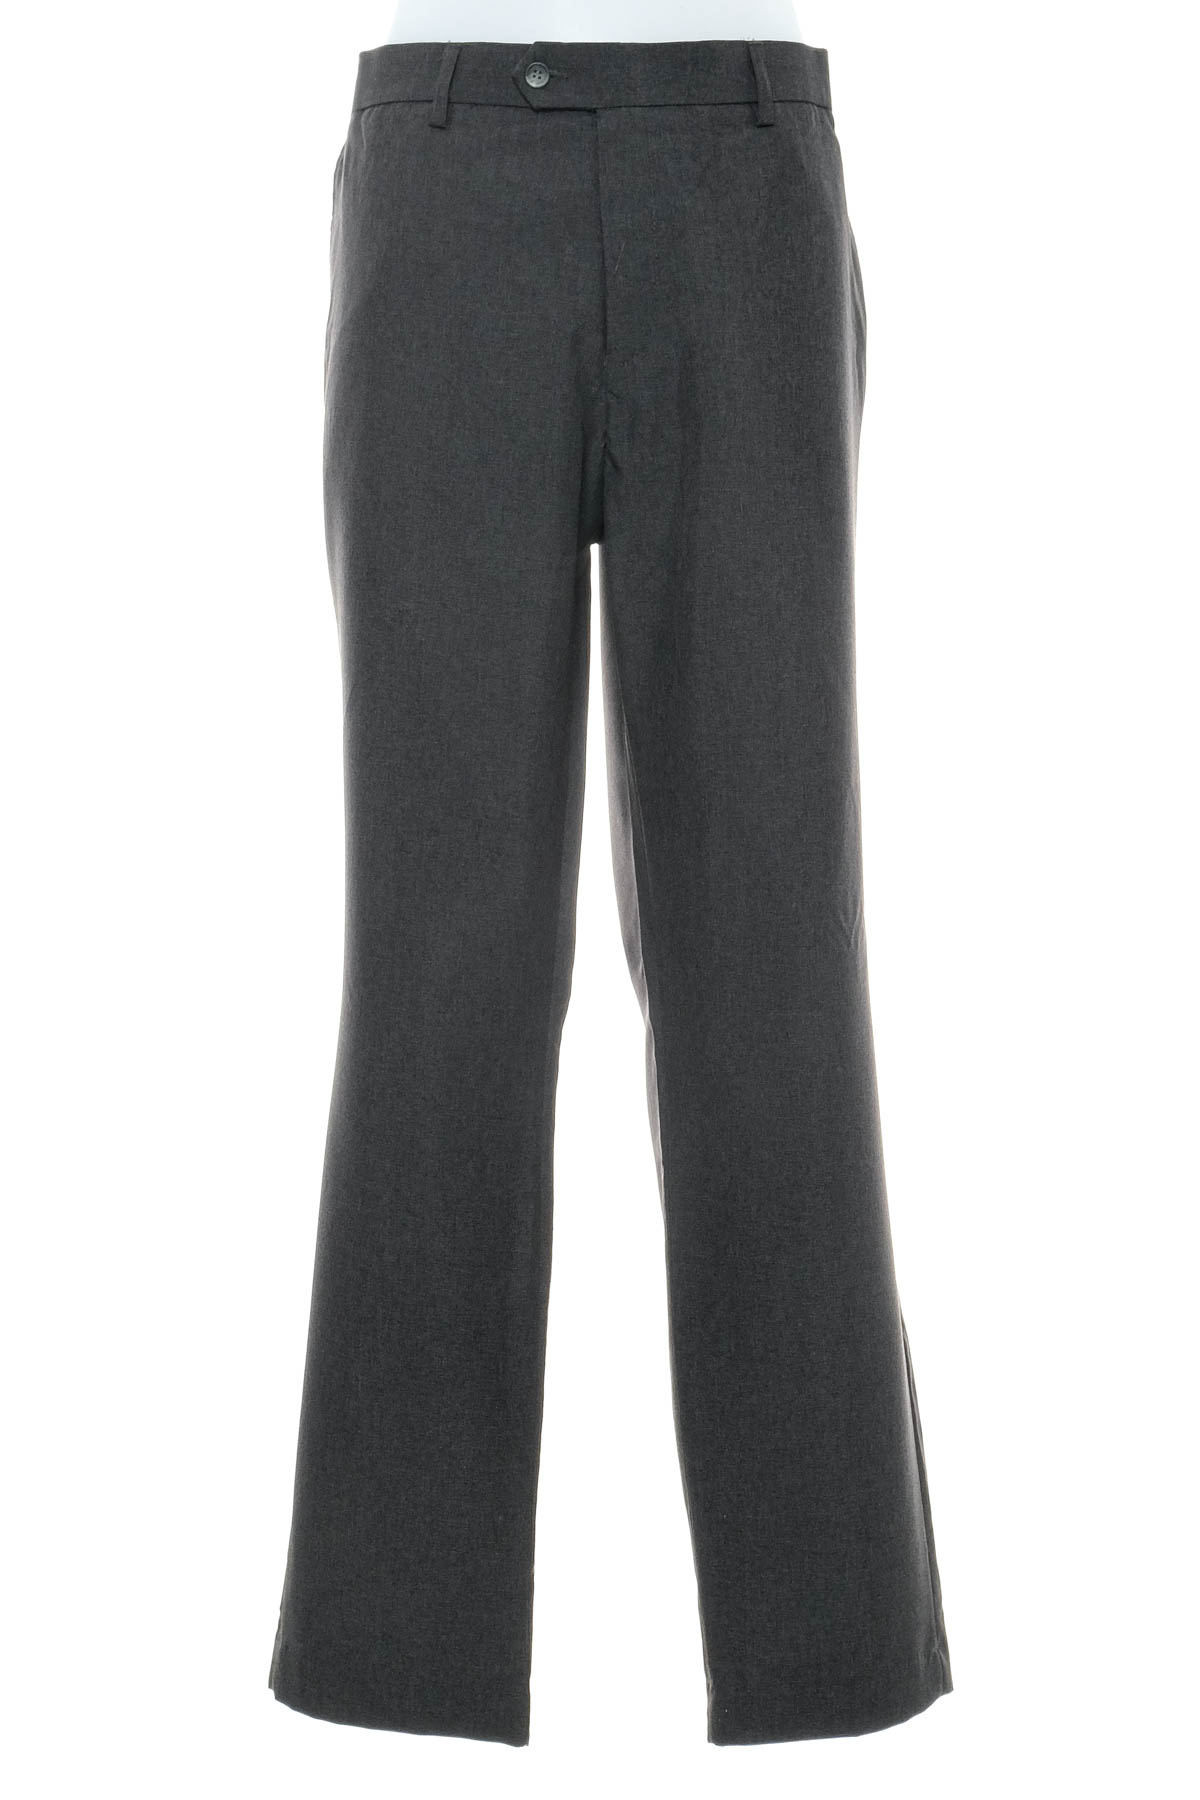 Pantalon pentru bărbați - Bpc selection bonprix collection - 0